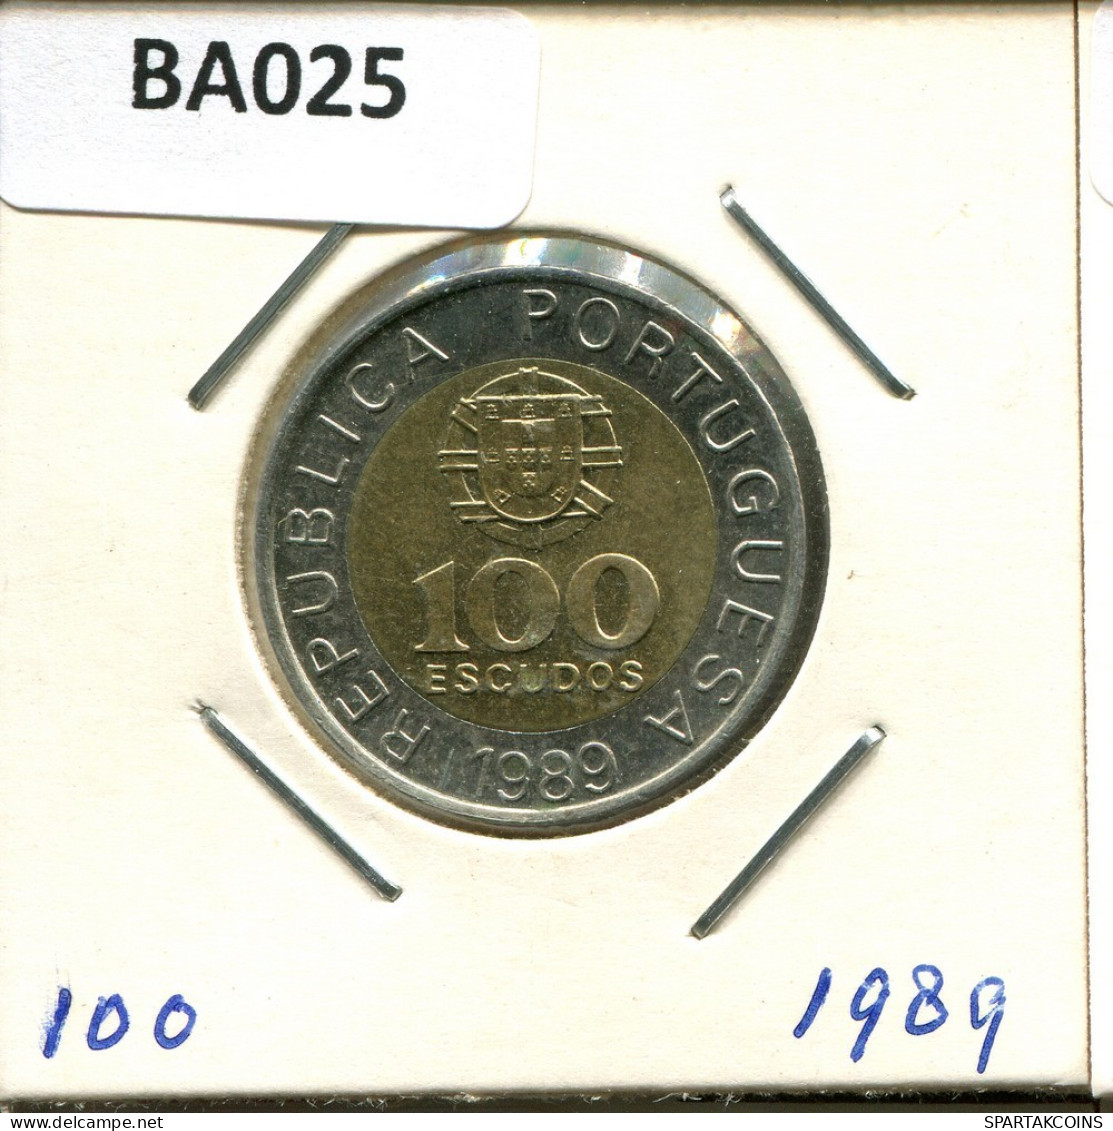 100 ESCUDOS 1989 PORTUGAL Coin BIMETALLIC #BA025.U.A - Portugal